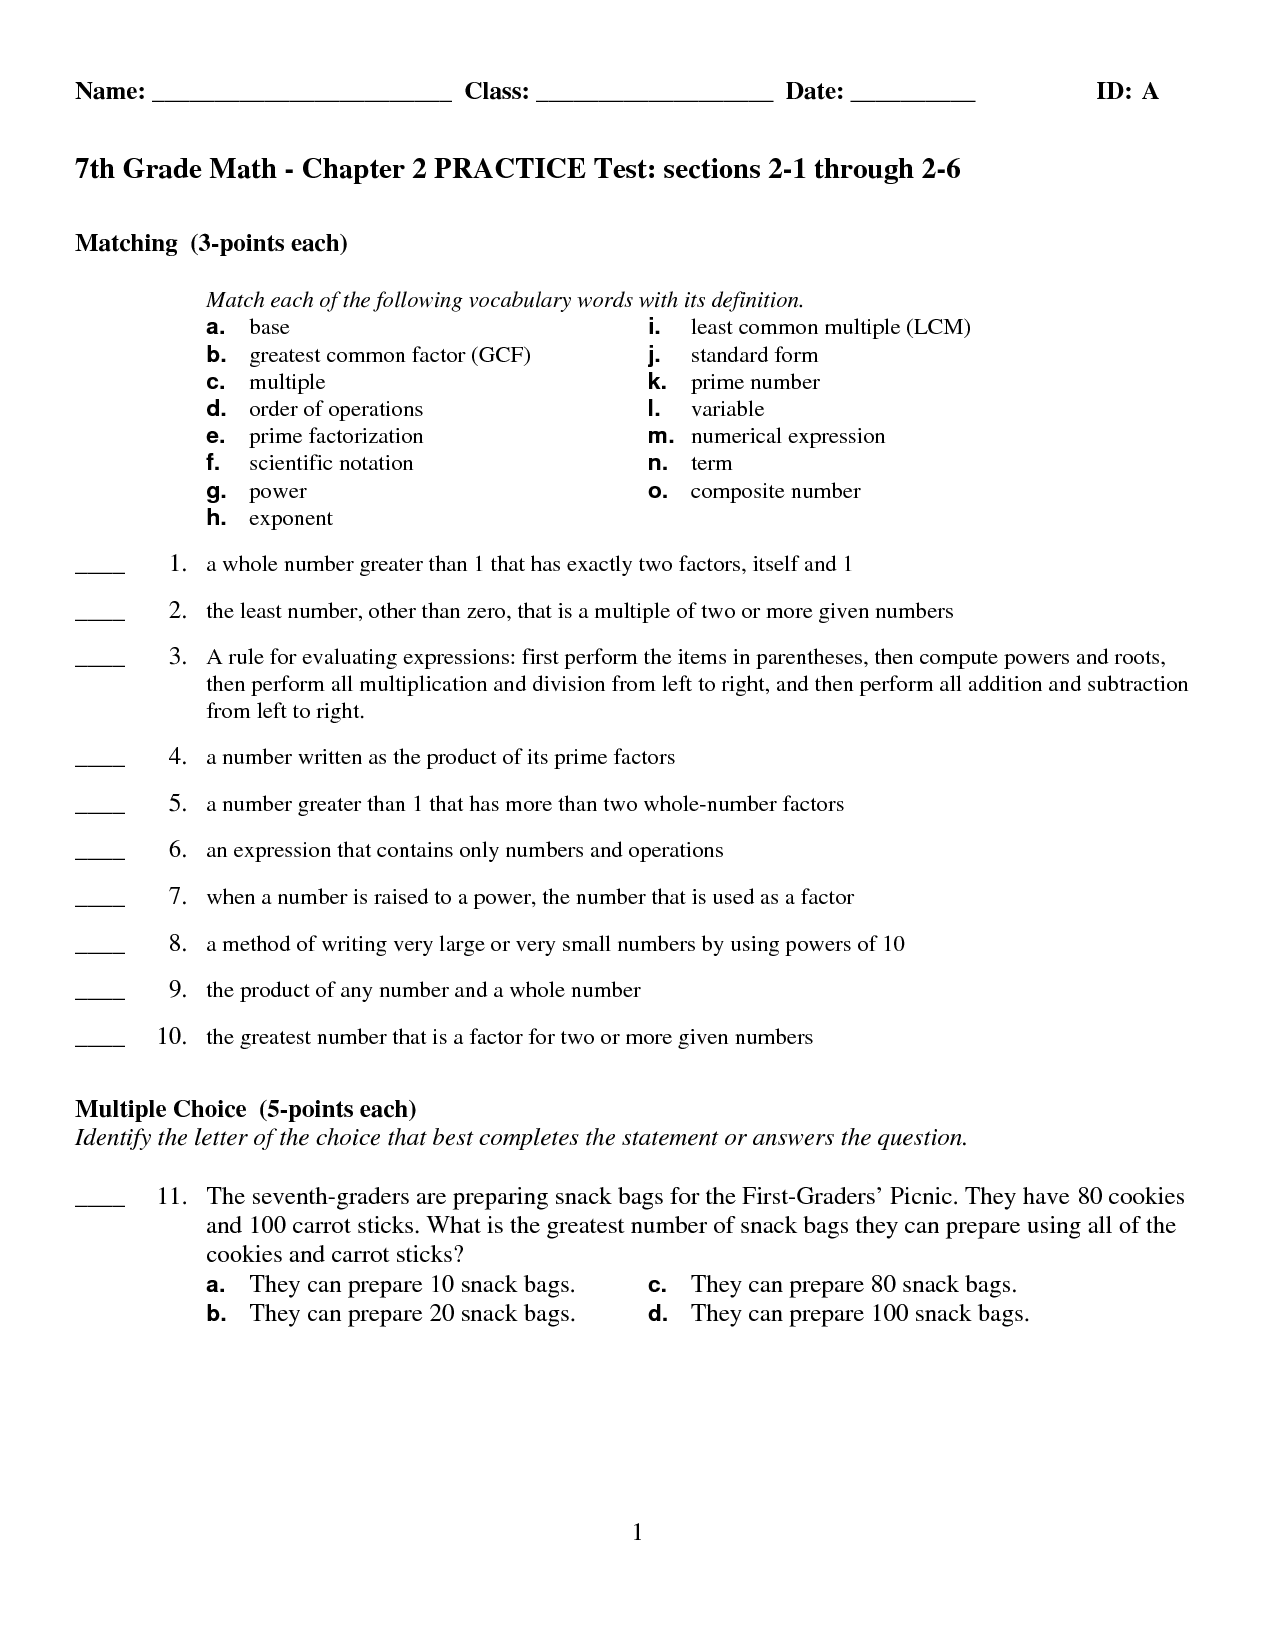 7th Grade Math Practice Test Image